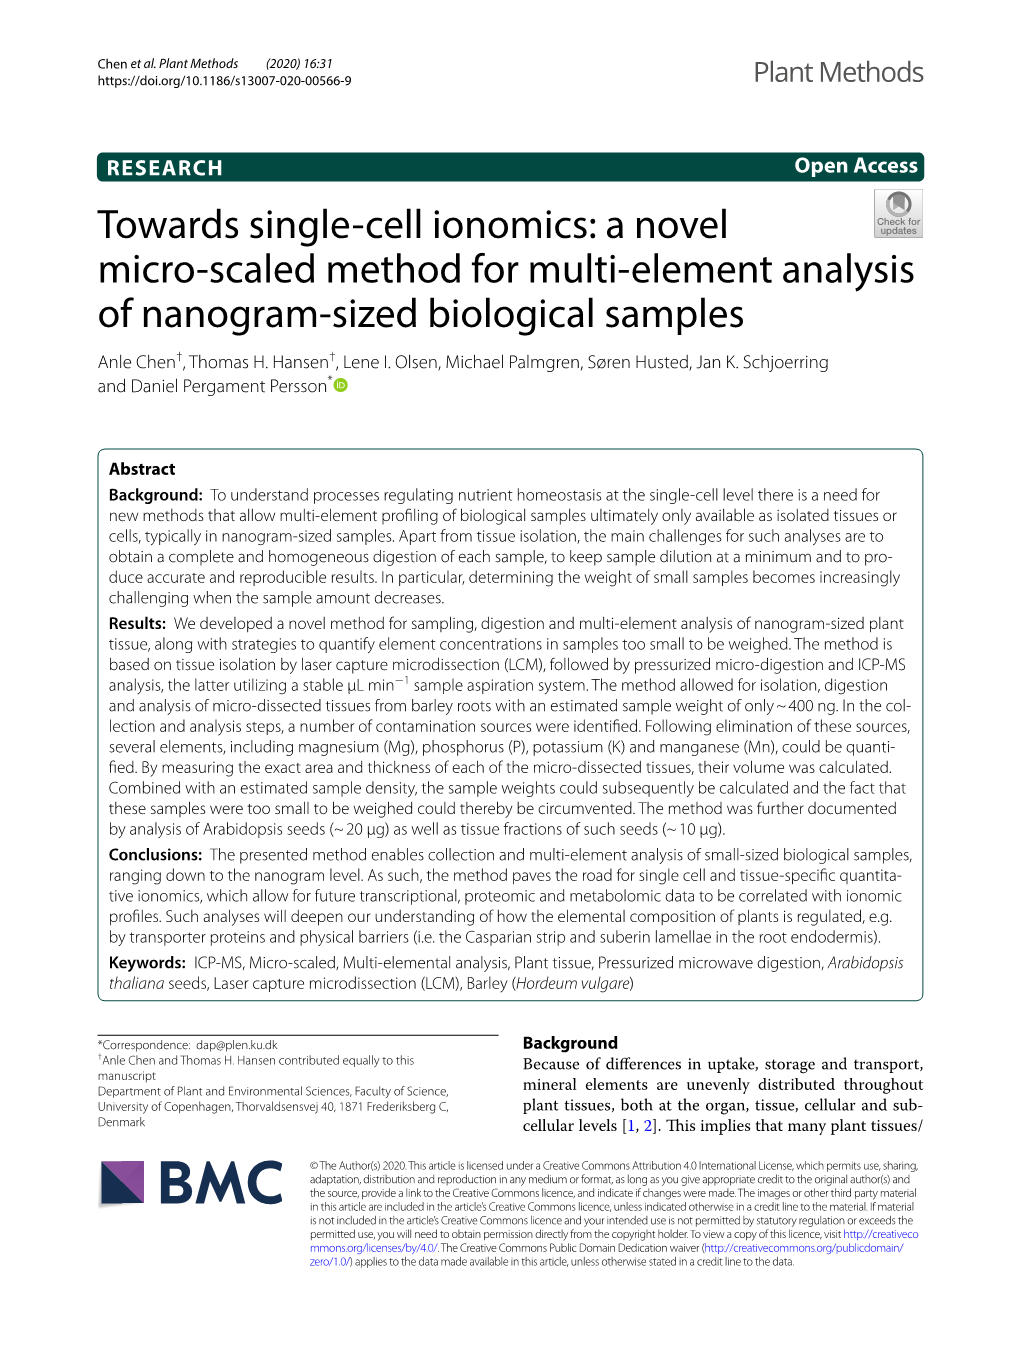 Towards Single-Cell Ionomics: a Novel Micro-Scaled Method for Multi